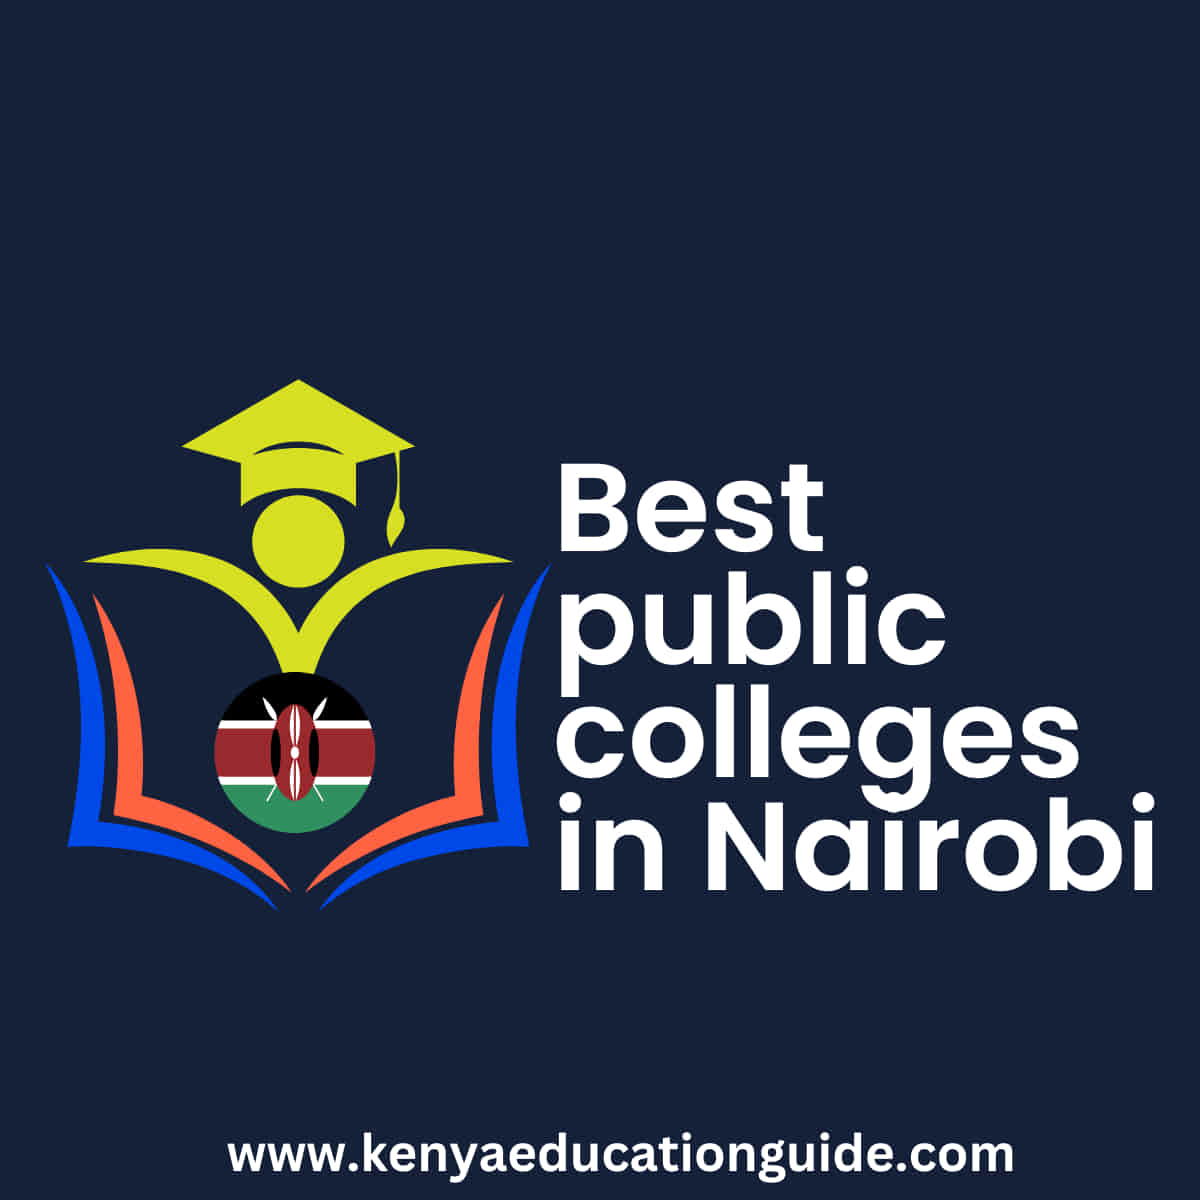 Best public colleges in Nairobi